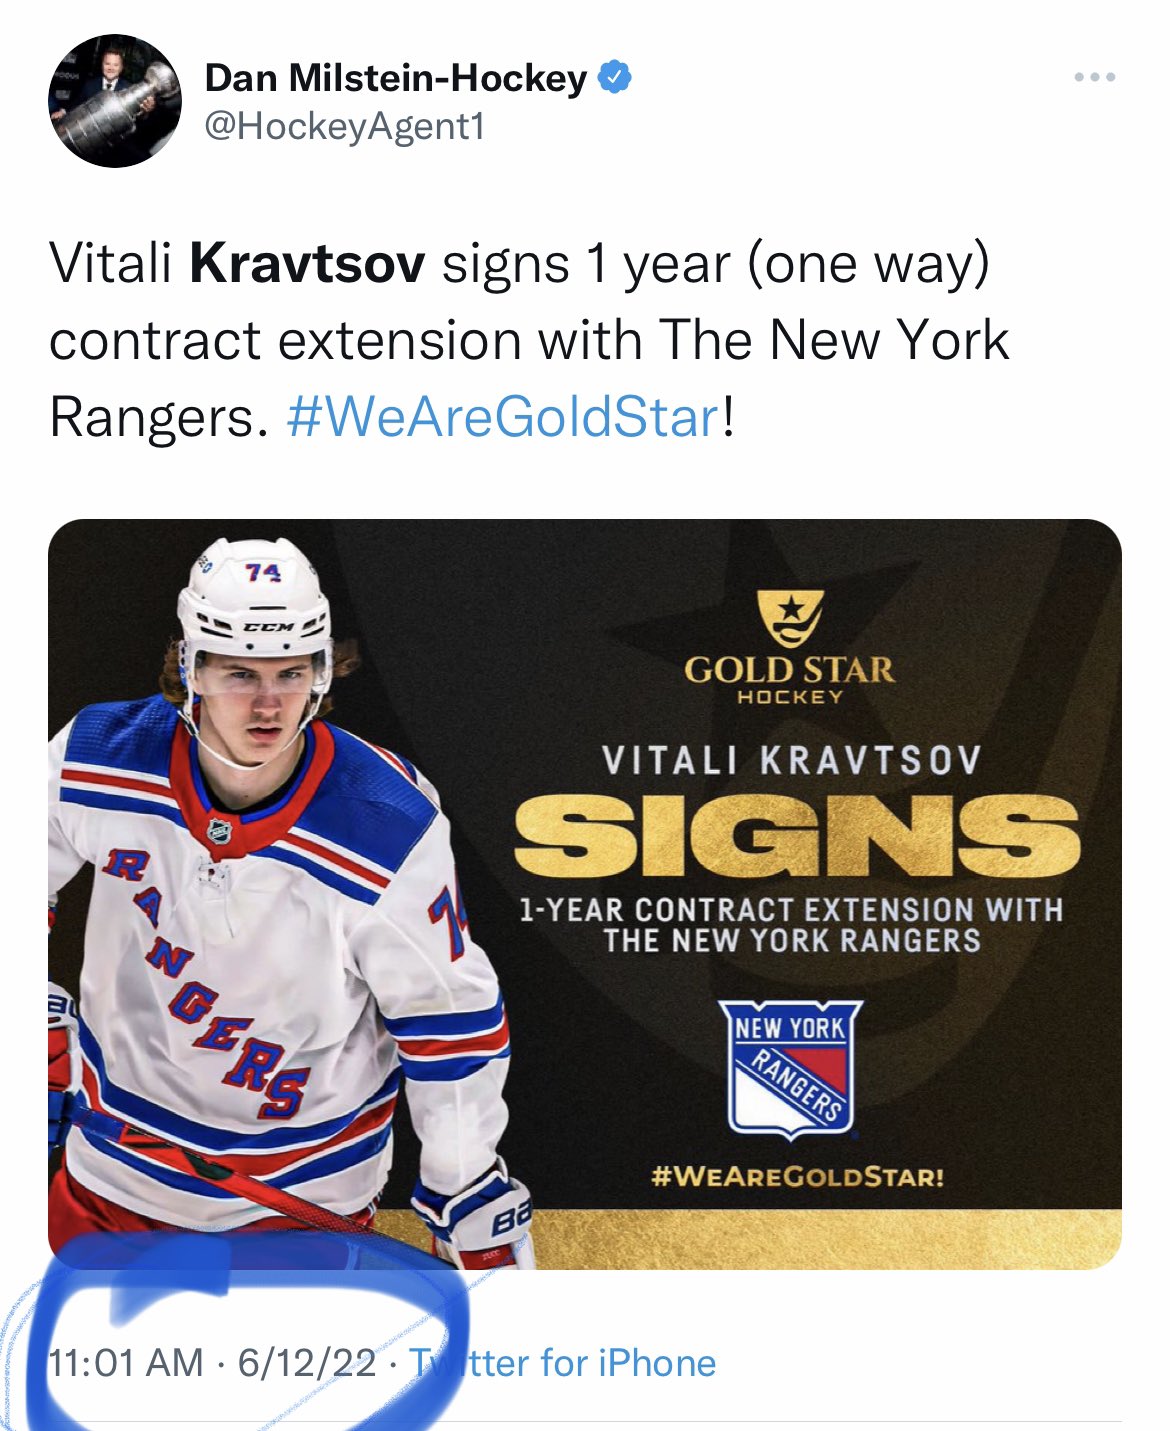 Vitali Kravtsov - NHL Right wing - News, Stats, Bio and more - The